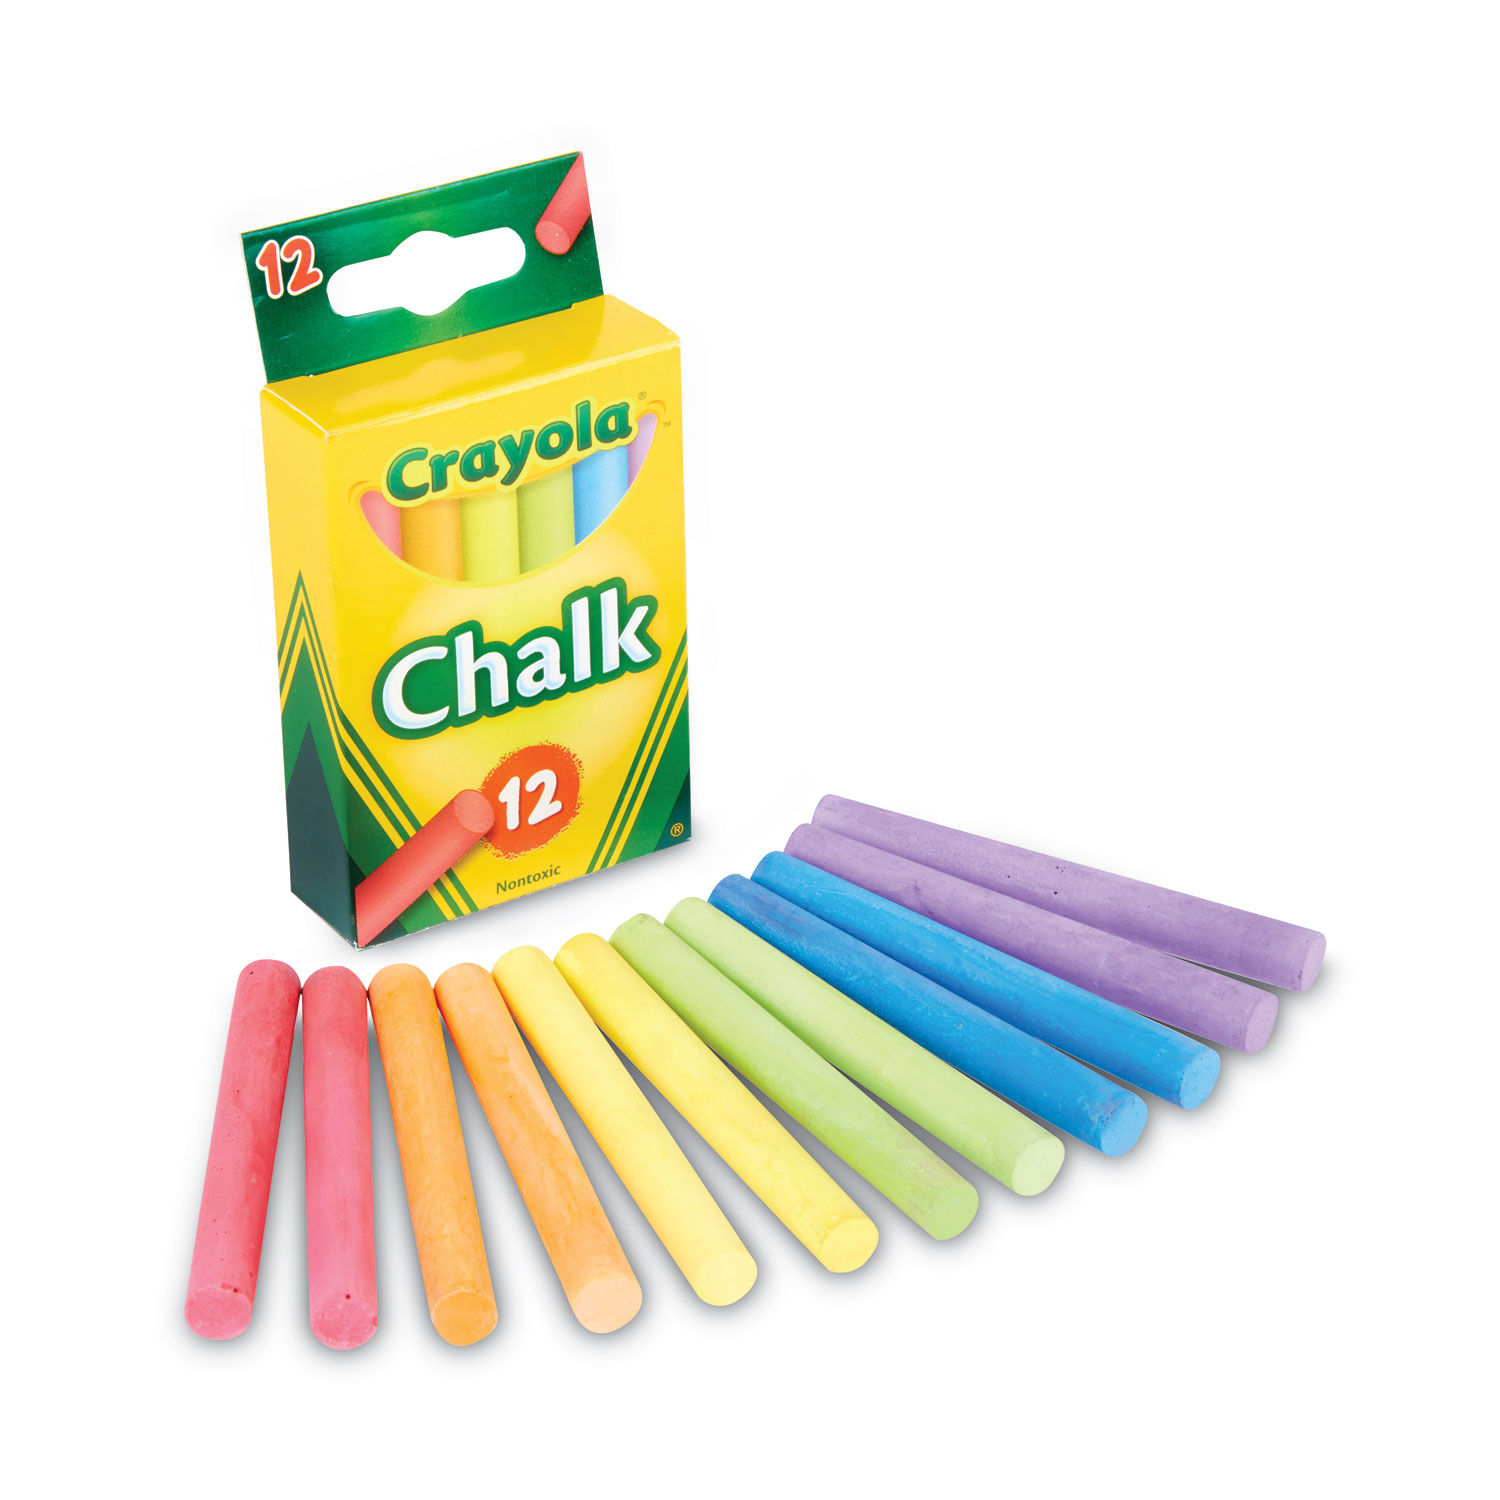 Chalk by Crayolaandreg; CYO510816